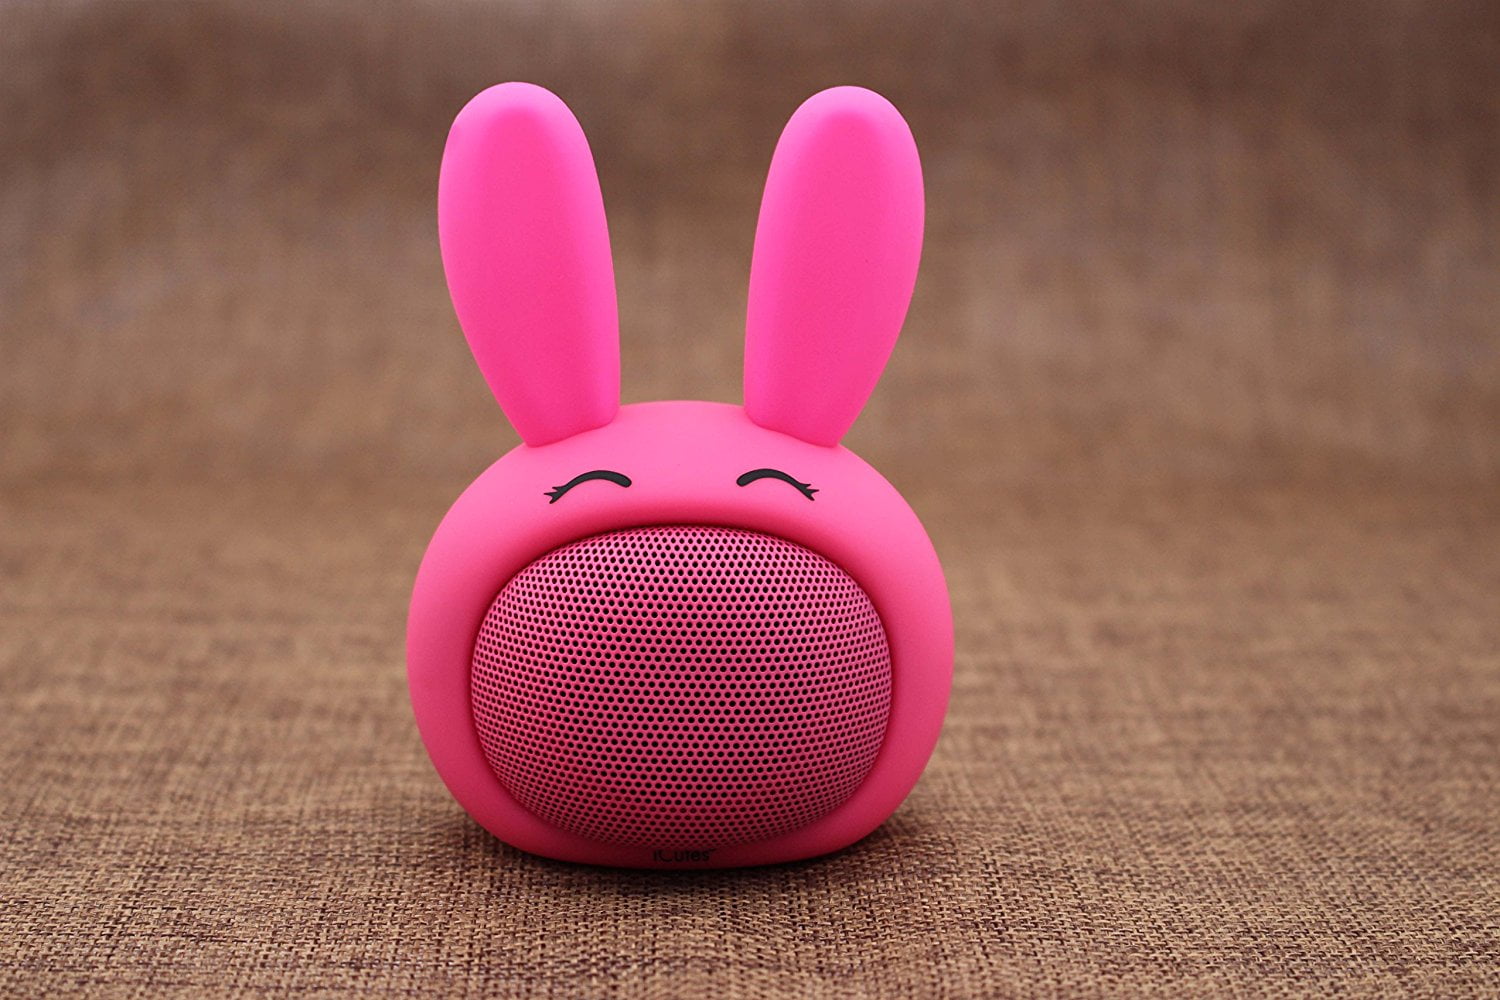 Elite iCutes Portable Bluetooth Wireless Speaker, cute pink bluetooth speaker - Walmart.com